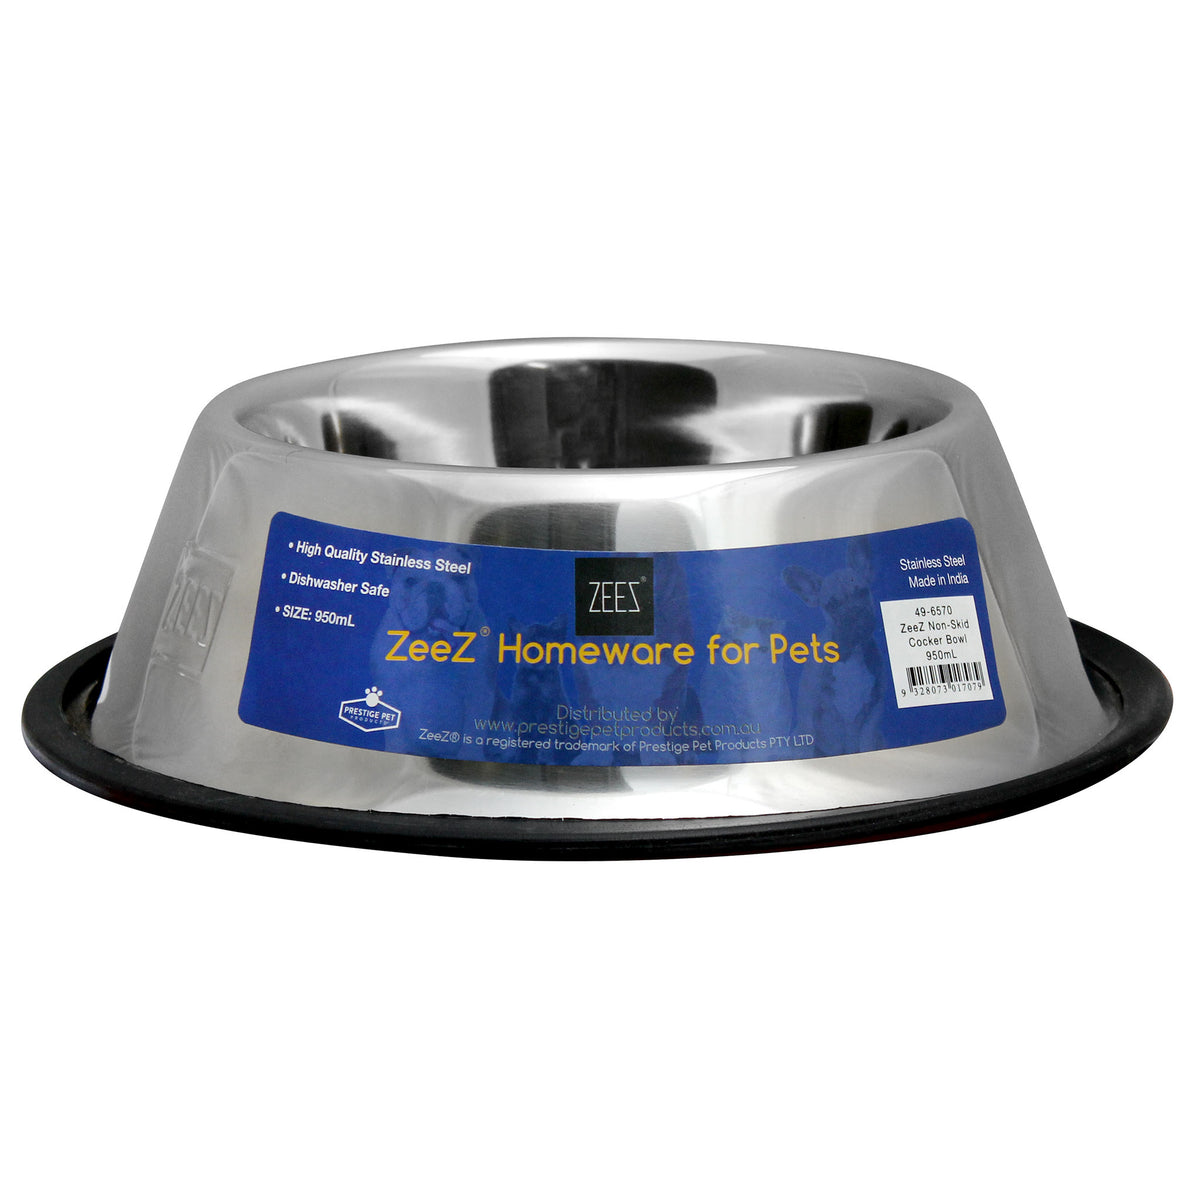 Zeez Stainless Steel Non-Skid Cocker Spaniel Bowl 950ml